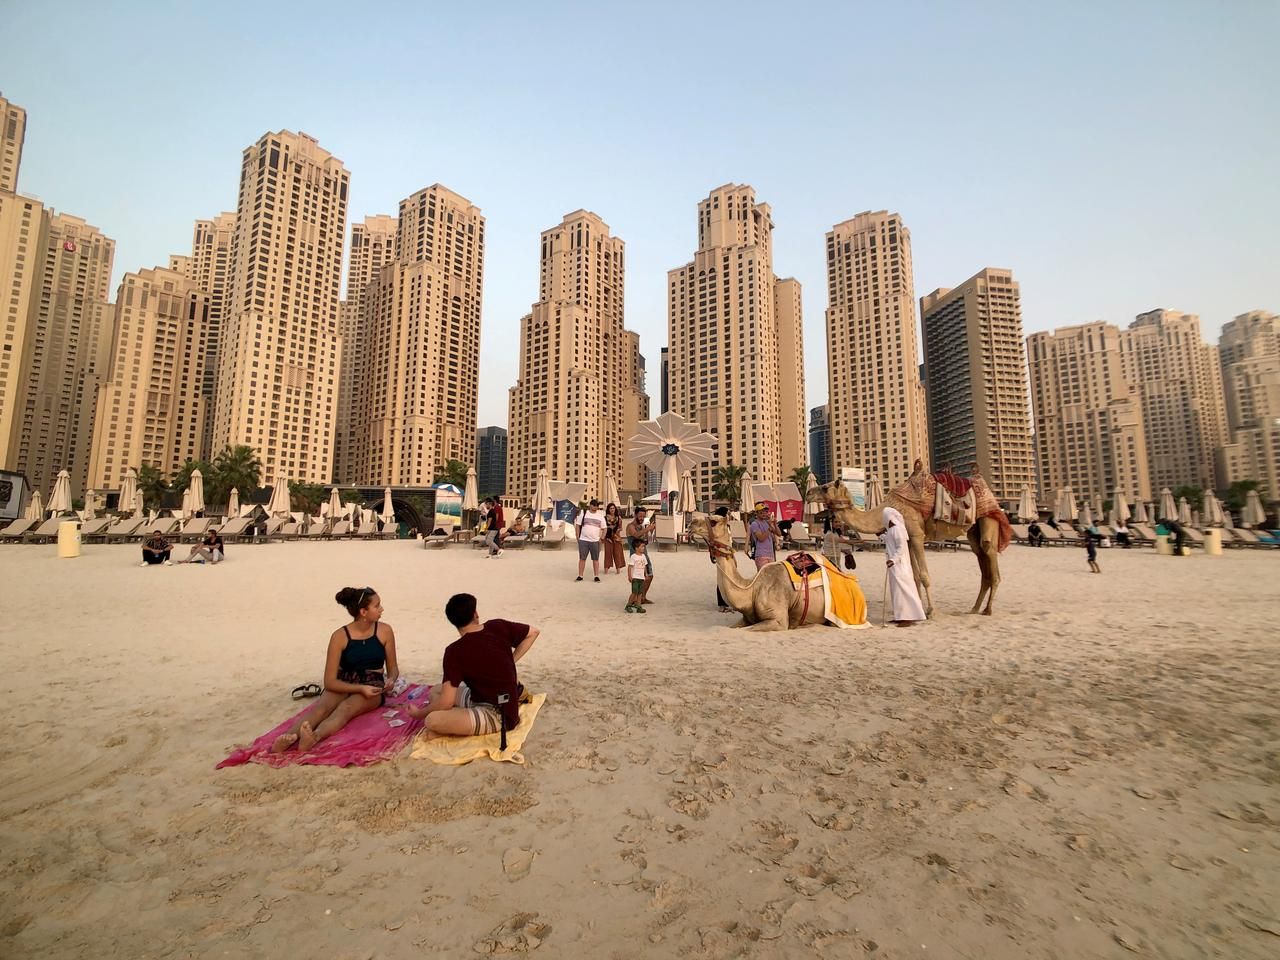 S&P warns coronavirus travel restrictions could hurt Dubai's hospitality industry